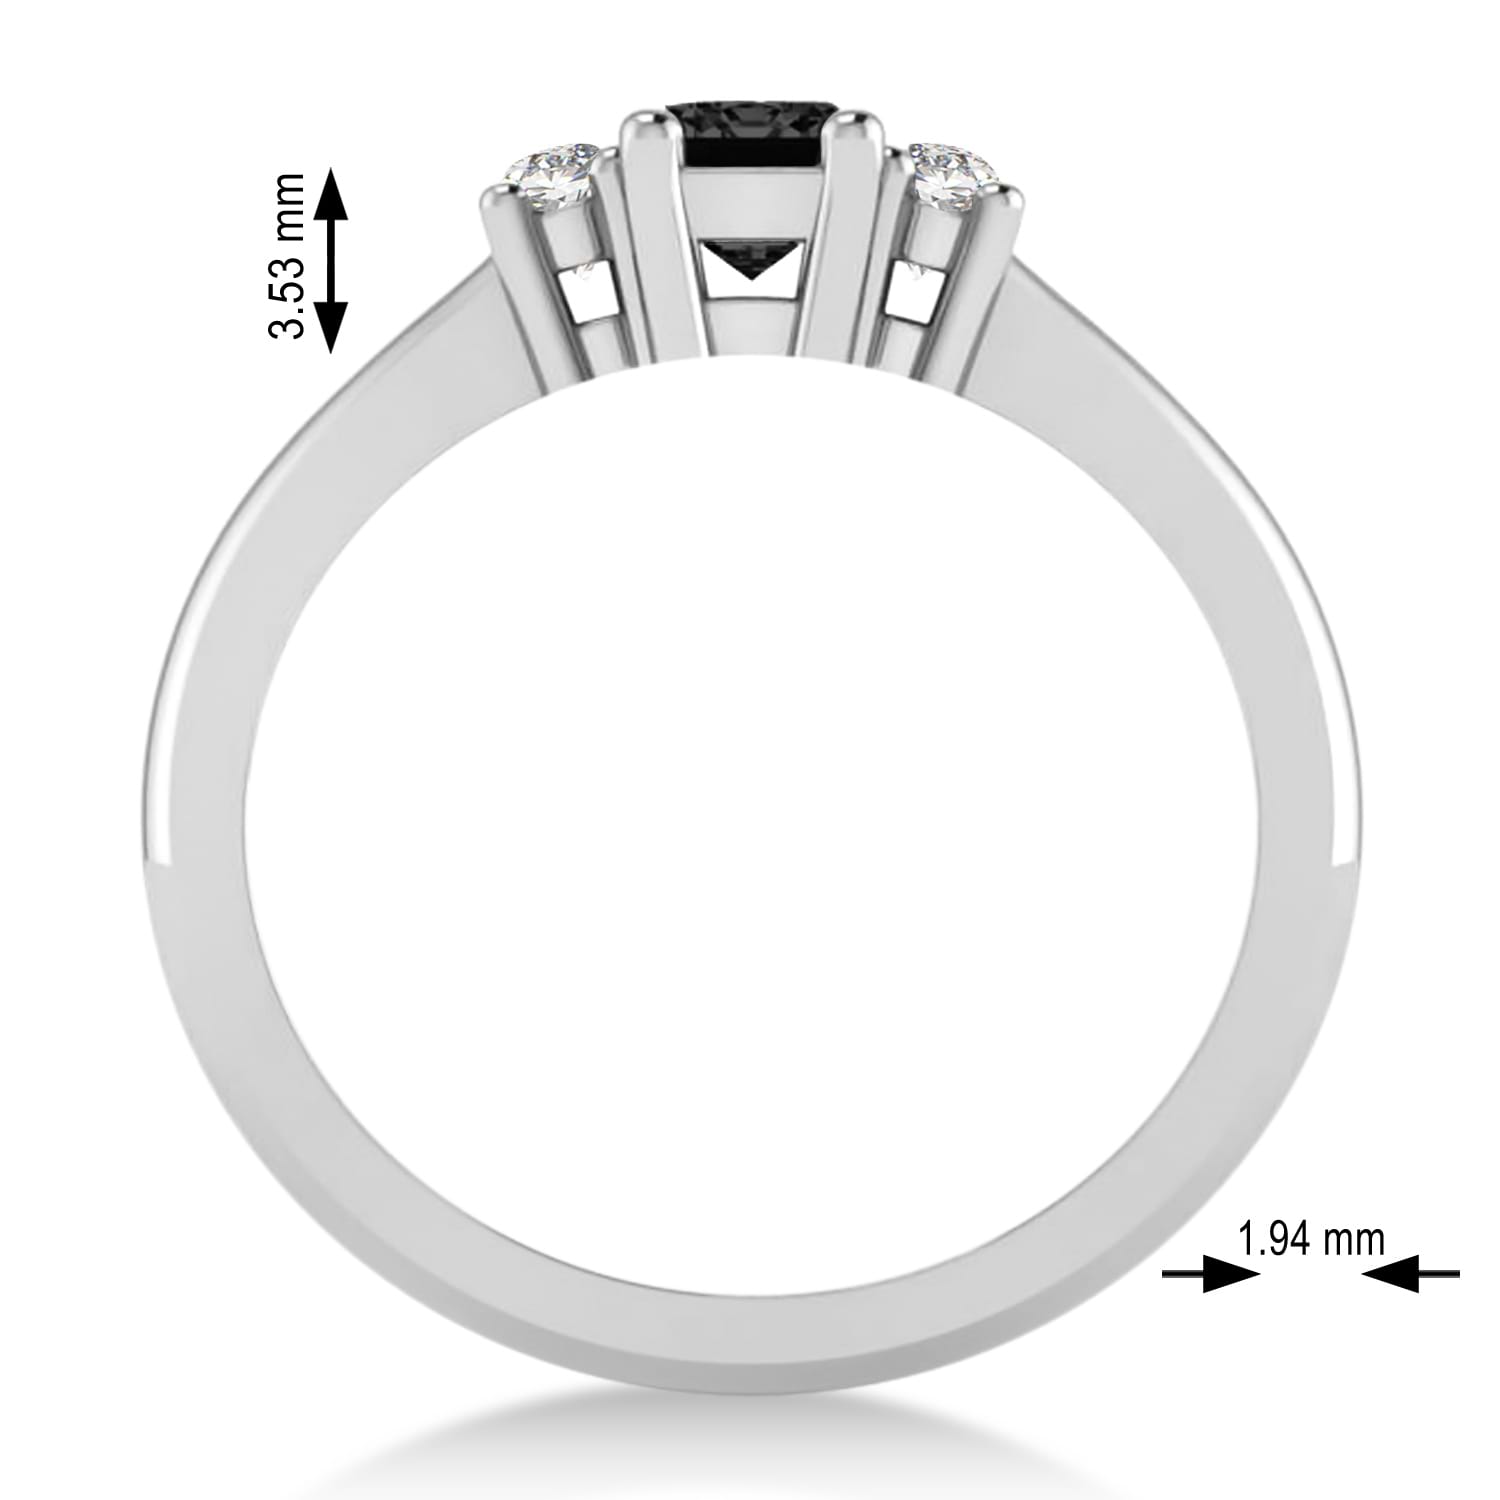 Emerald Black & White Diamond Three-Stone Engagement Ring 14k White Gold (0.60ct)